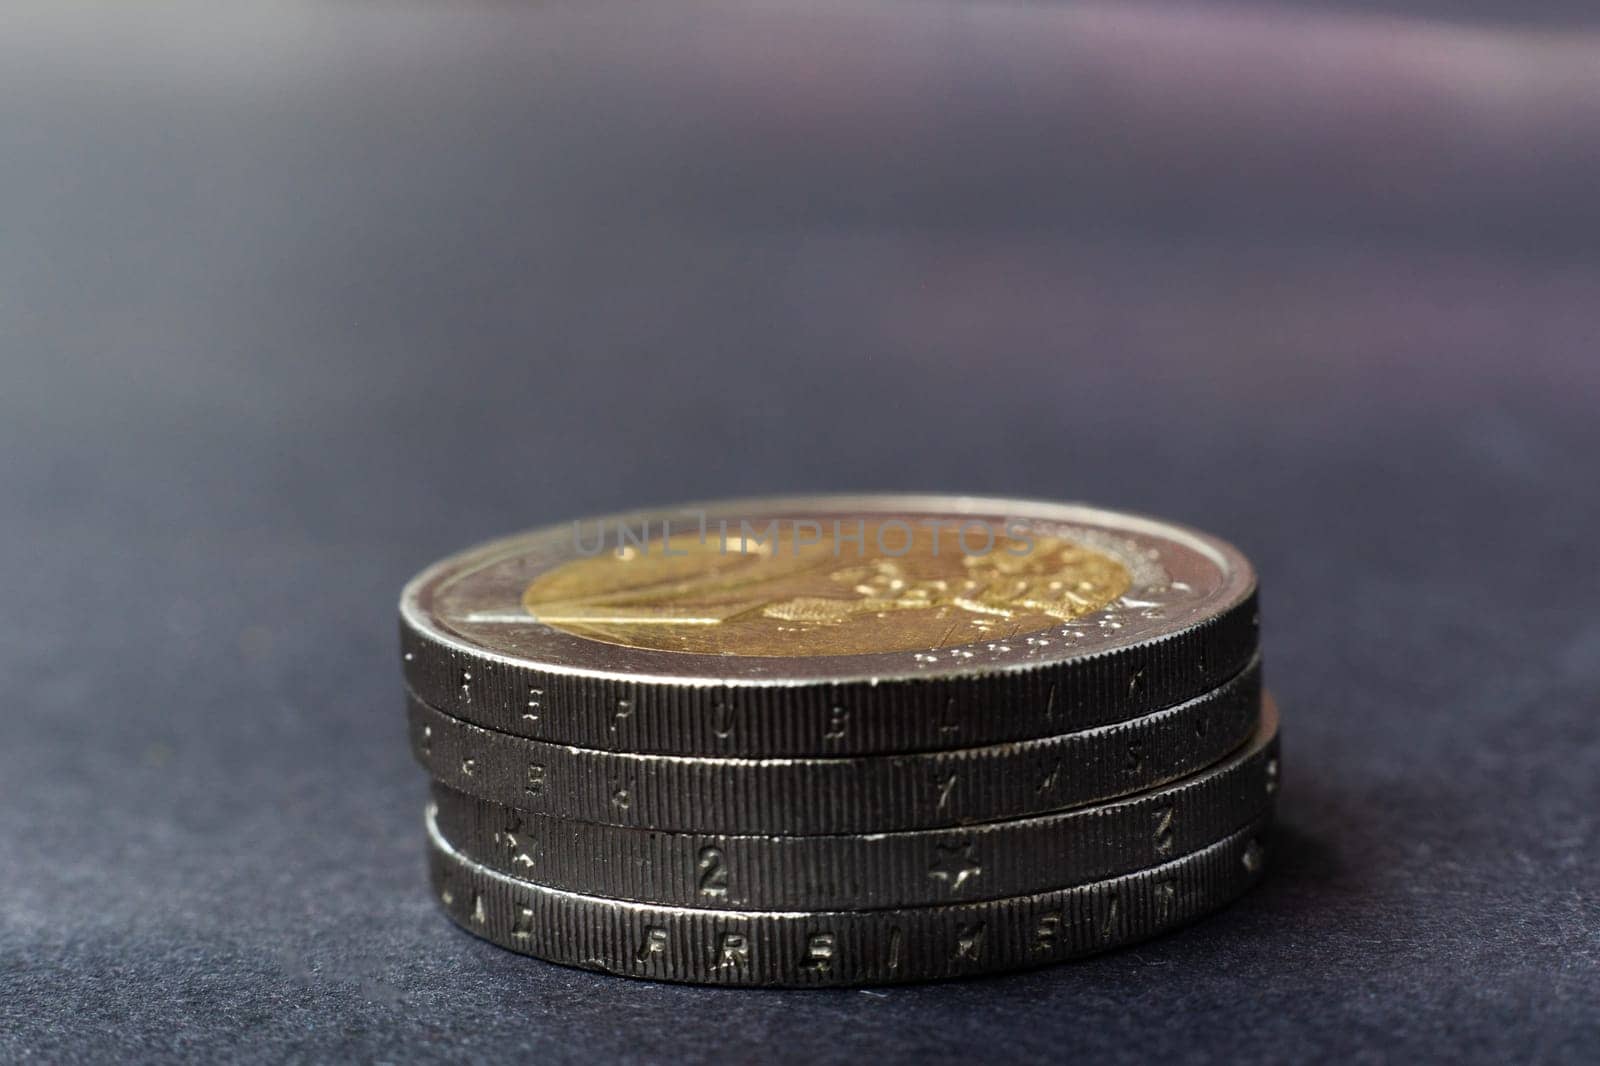 Euro close up photo. Macro coins. Soft focus, dark background by Zelenin